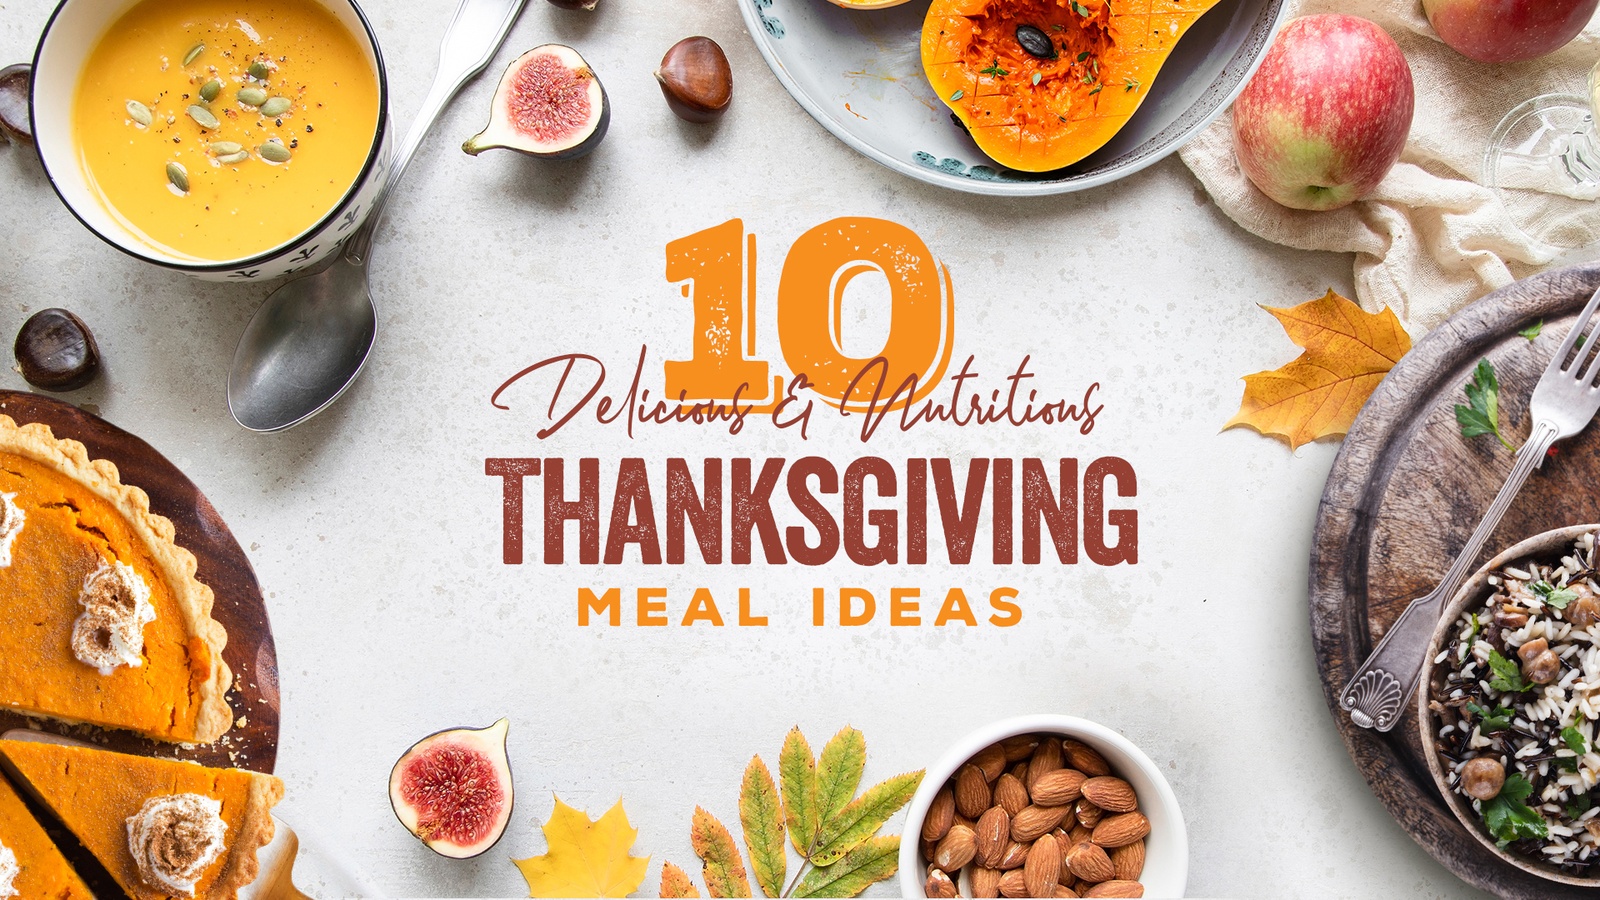 10 Delicious & Nutritious Thanksgiving Meal Ideas